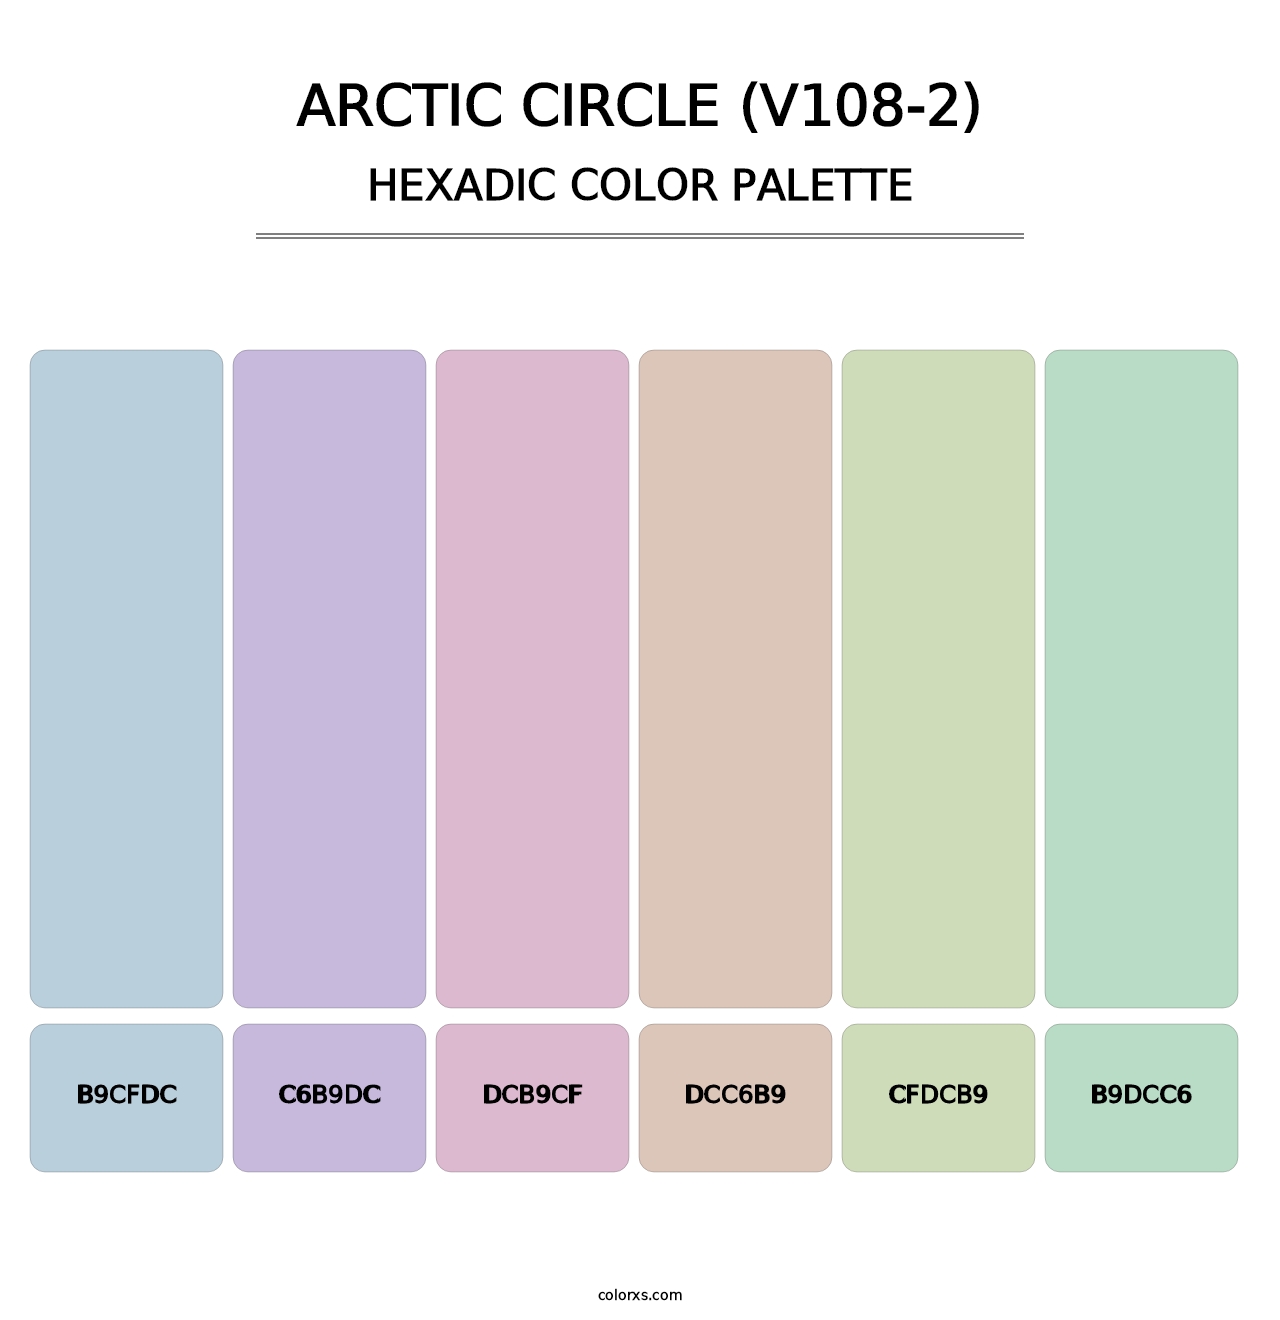 Arctic Circle (V108-2) - Hexadic Color Palette